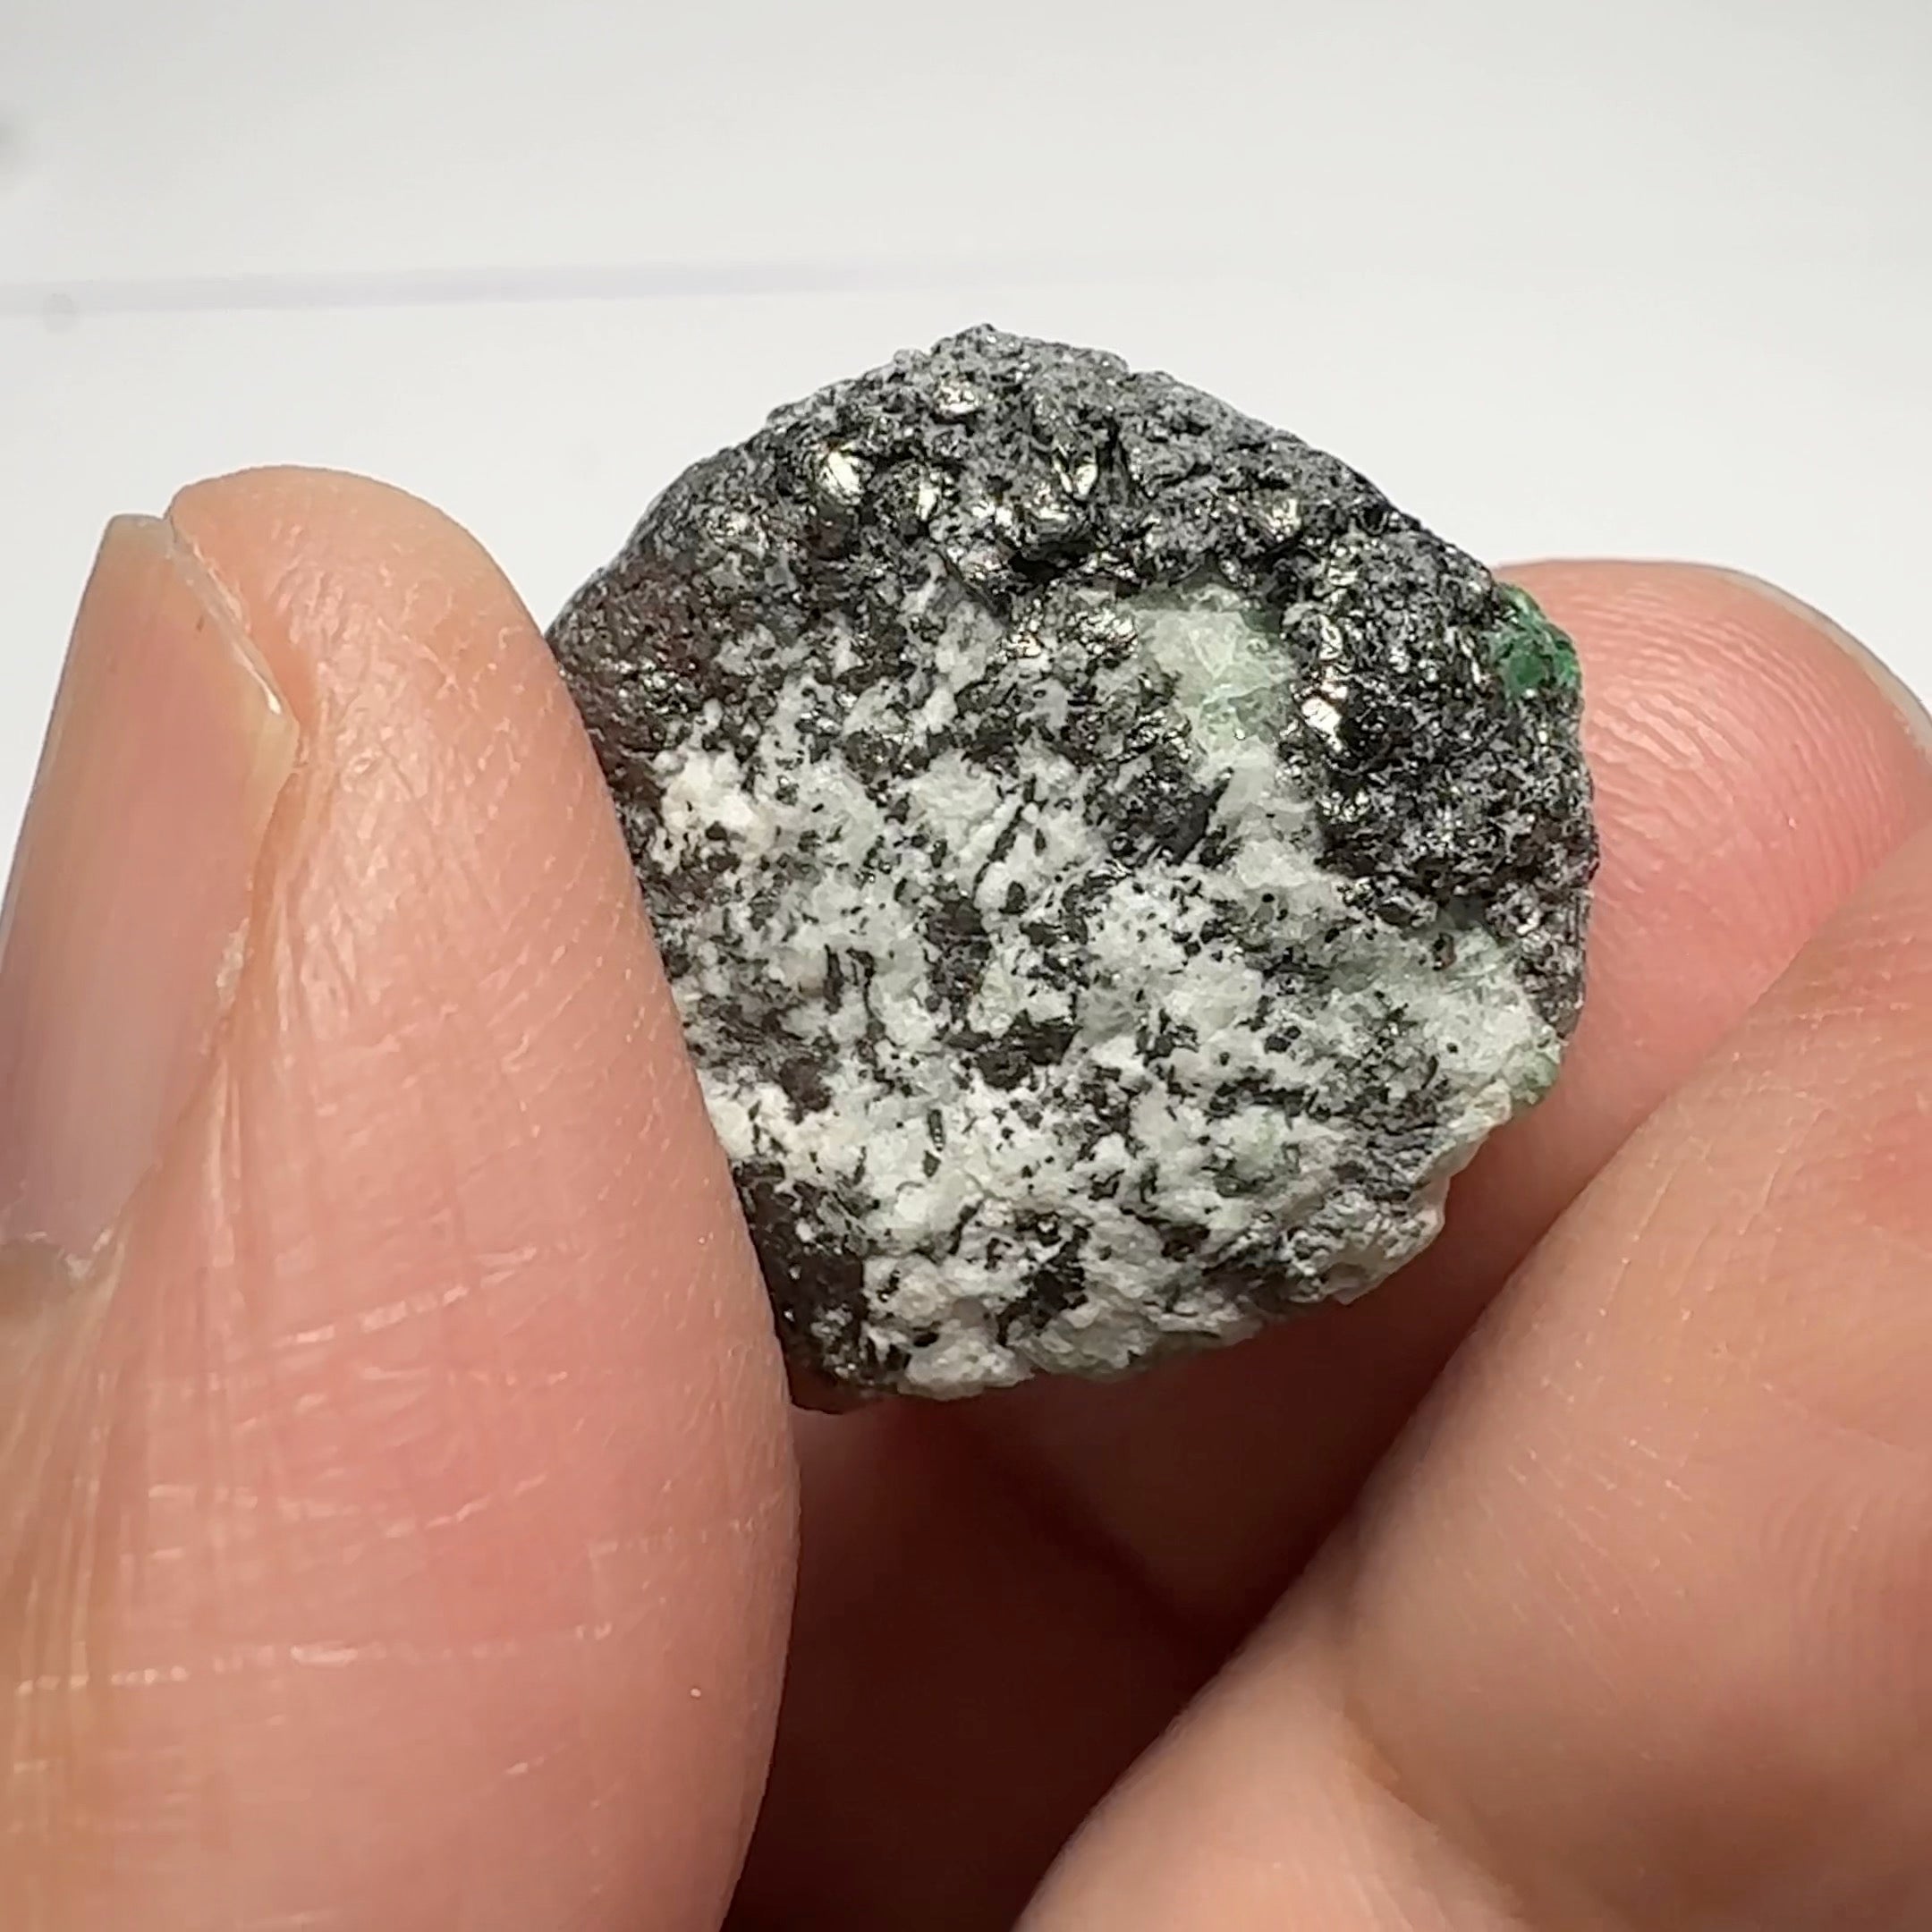 33.27ct Tsavorite Garnet on matrix with pyrite, Merelani, Tanzania